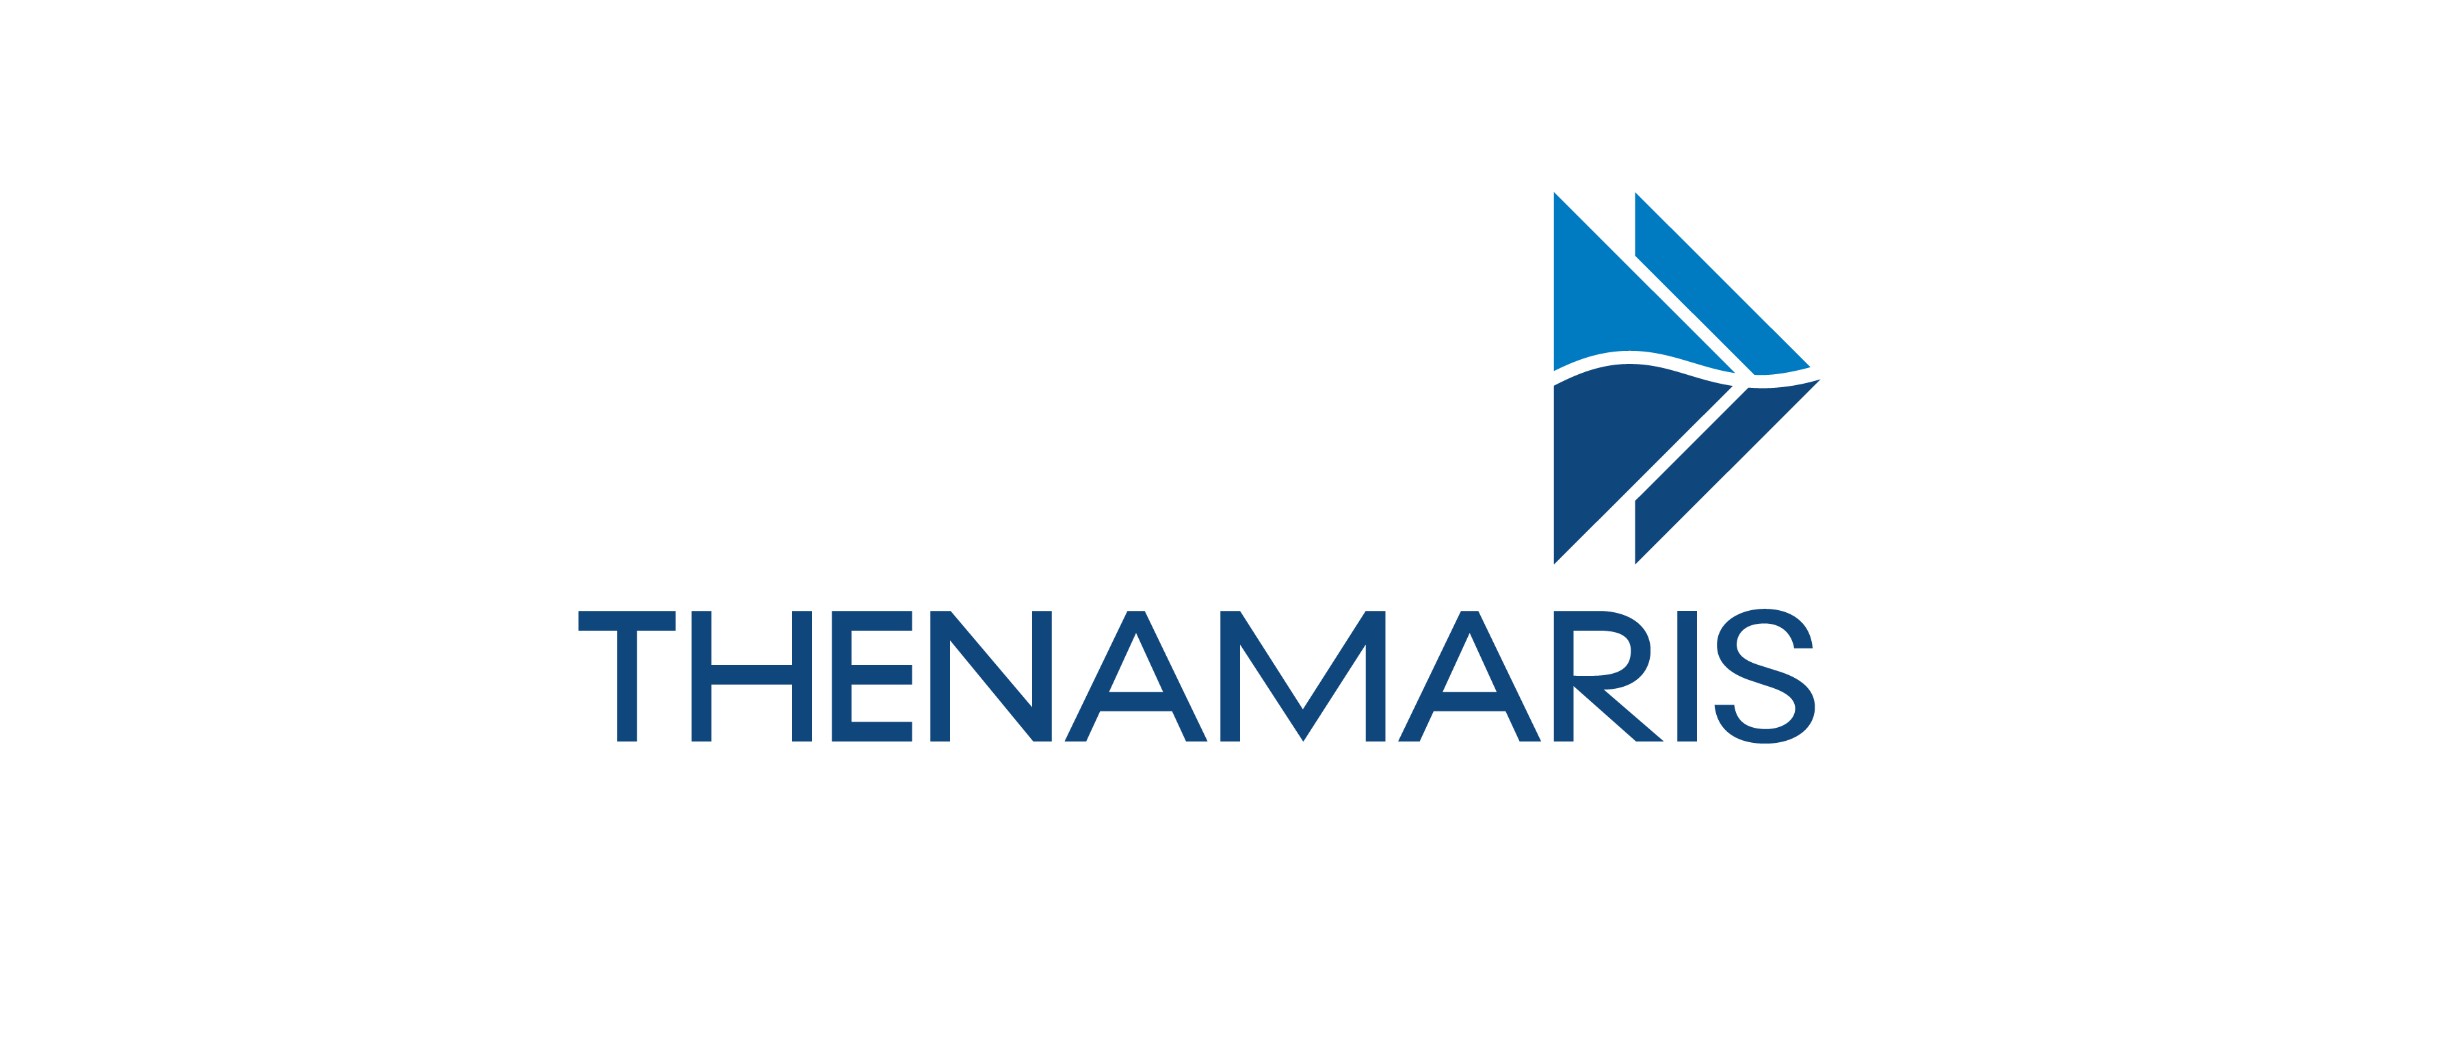 Thenamaris (Ships Management) Inc.